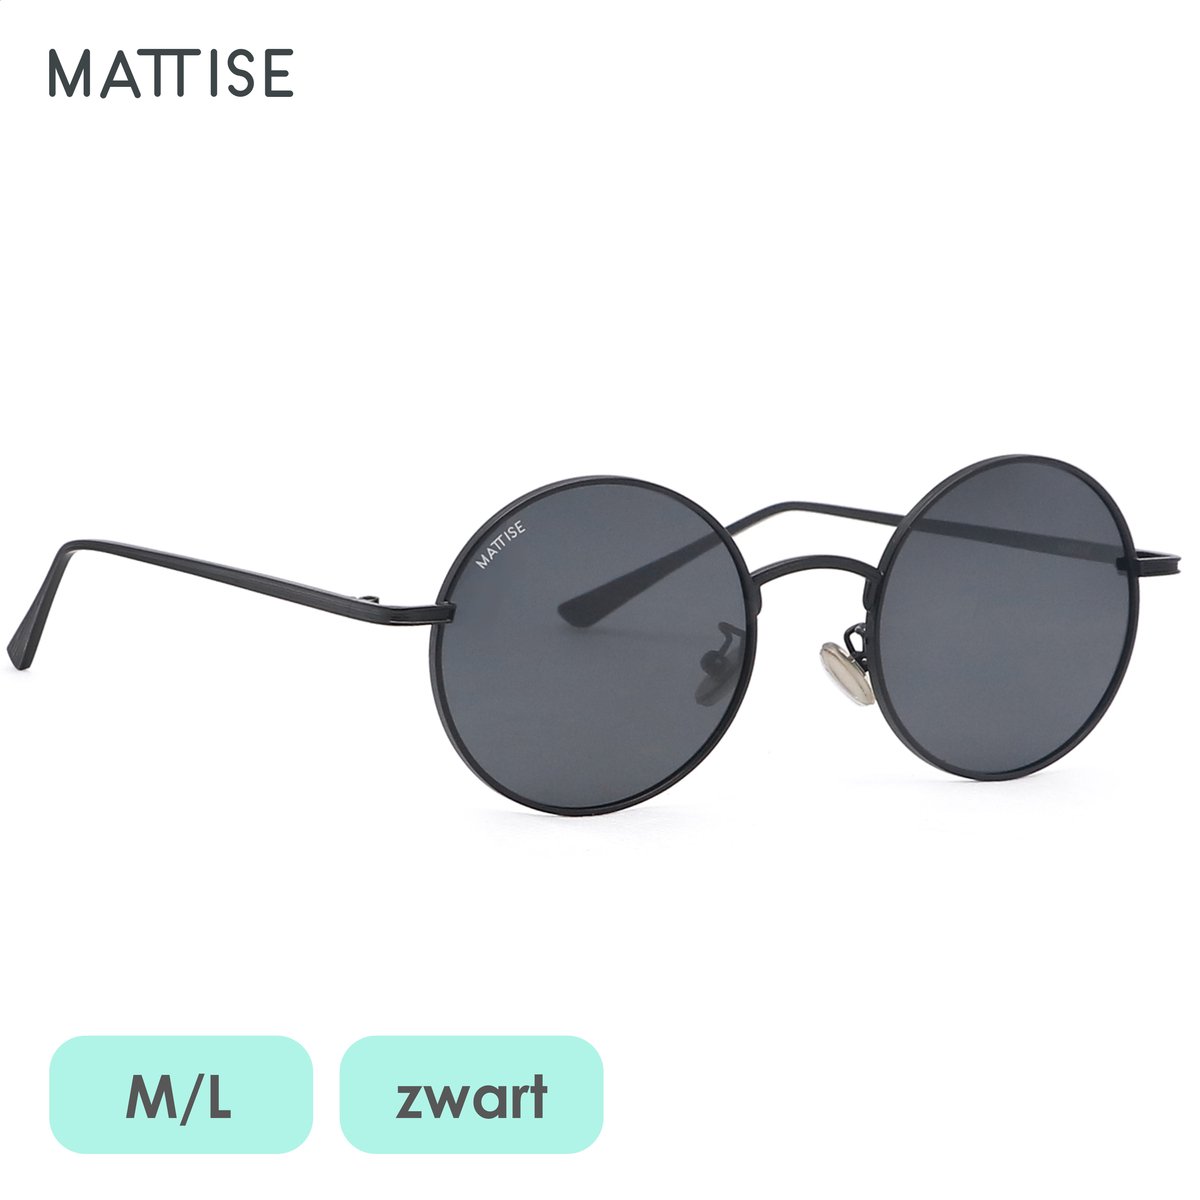 MATTISE Zwart Unisex Gepolariseerde Zonnebril van Staal — M/L Zonnebril Heren Dames — Hippie Bril Gepolariseerd — Zonnebrillen Brillen